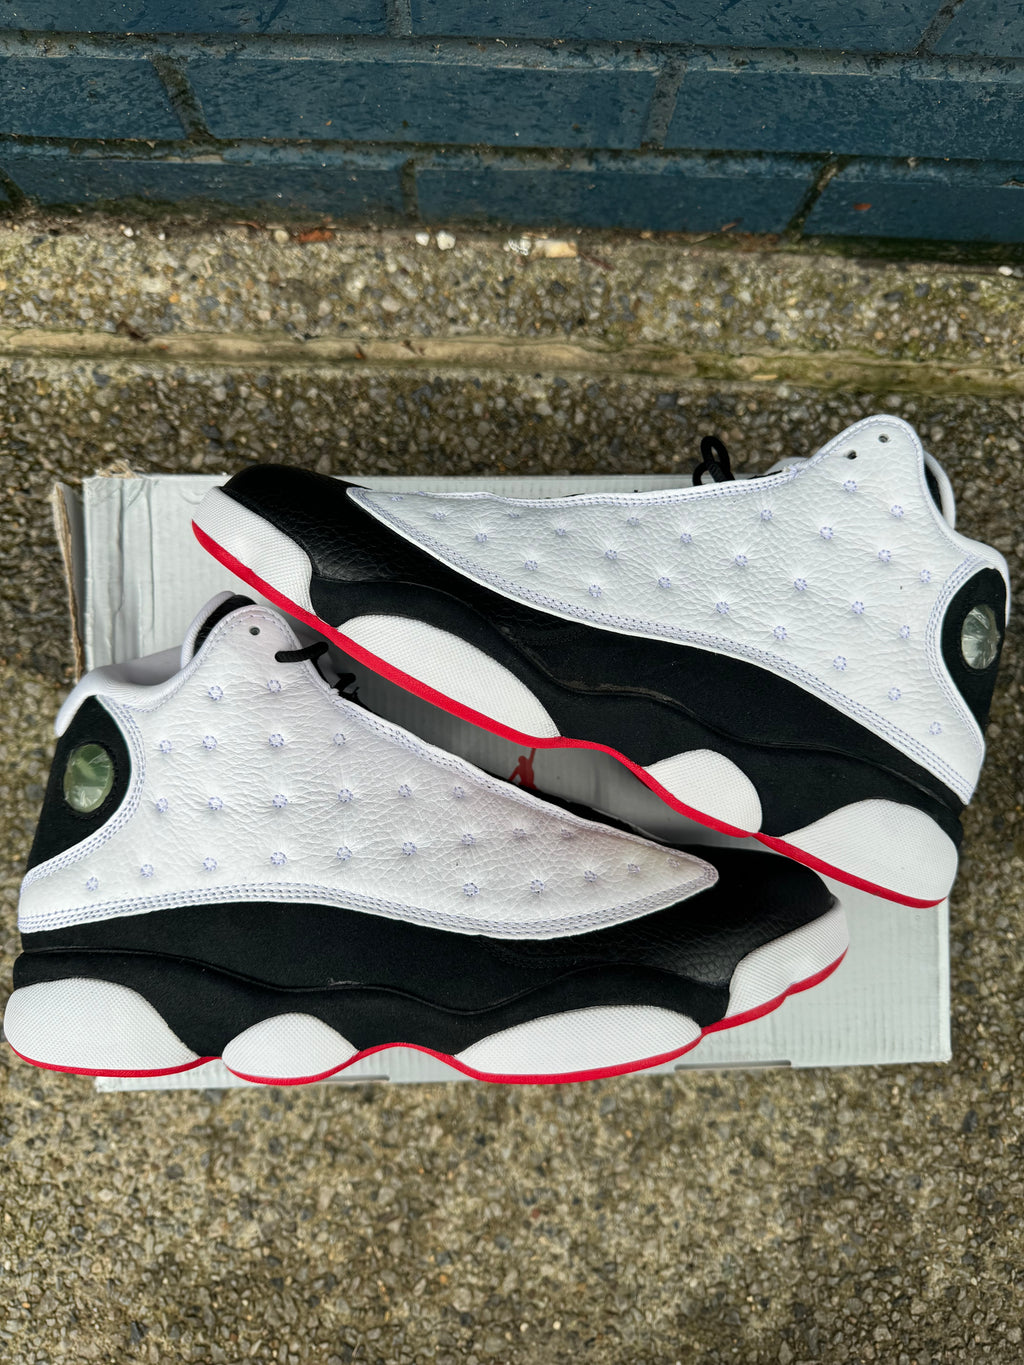 Air Jordan 13 “He Got Game” / Size 11